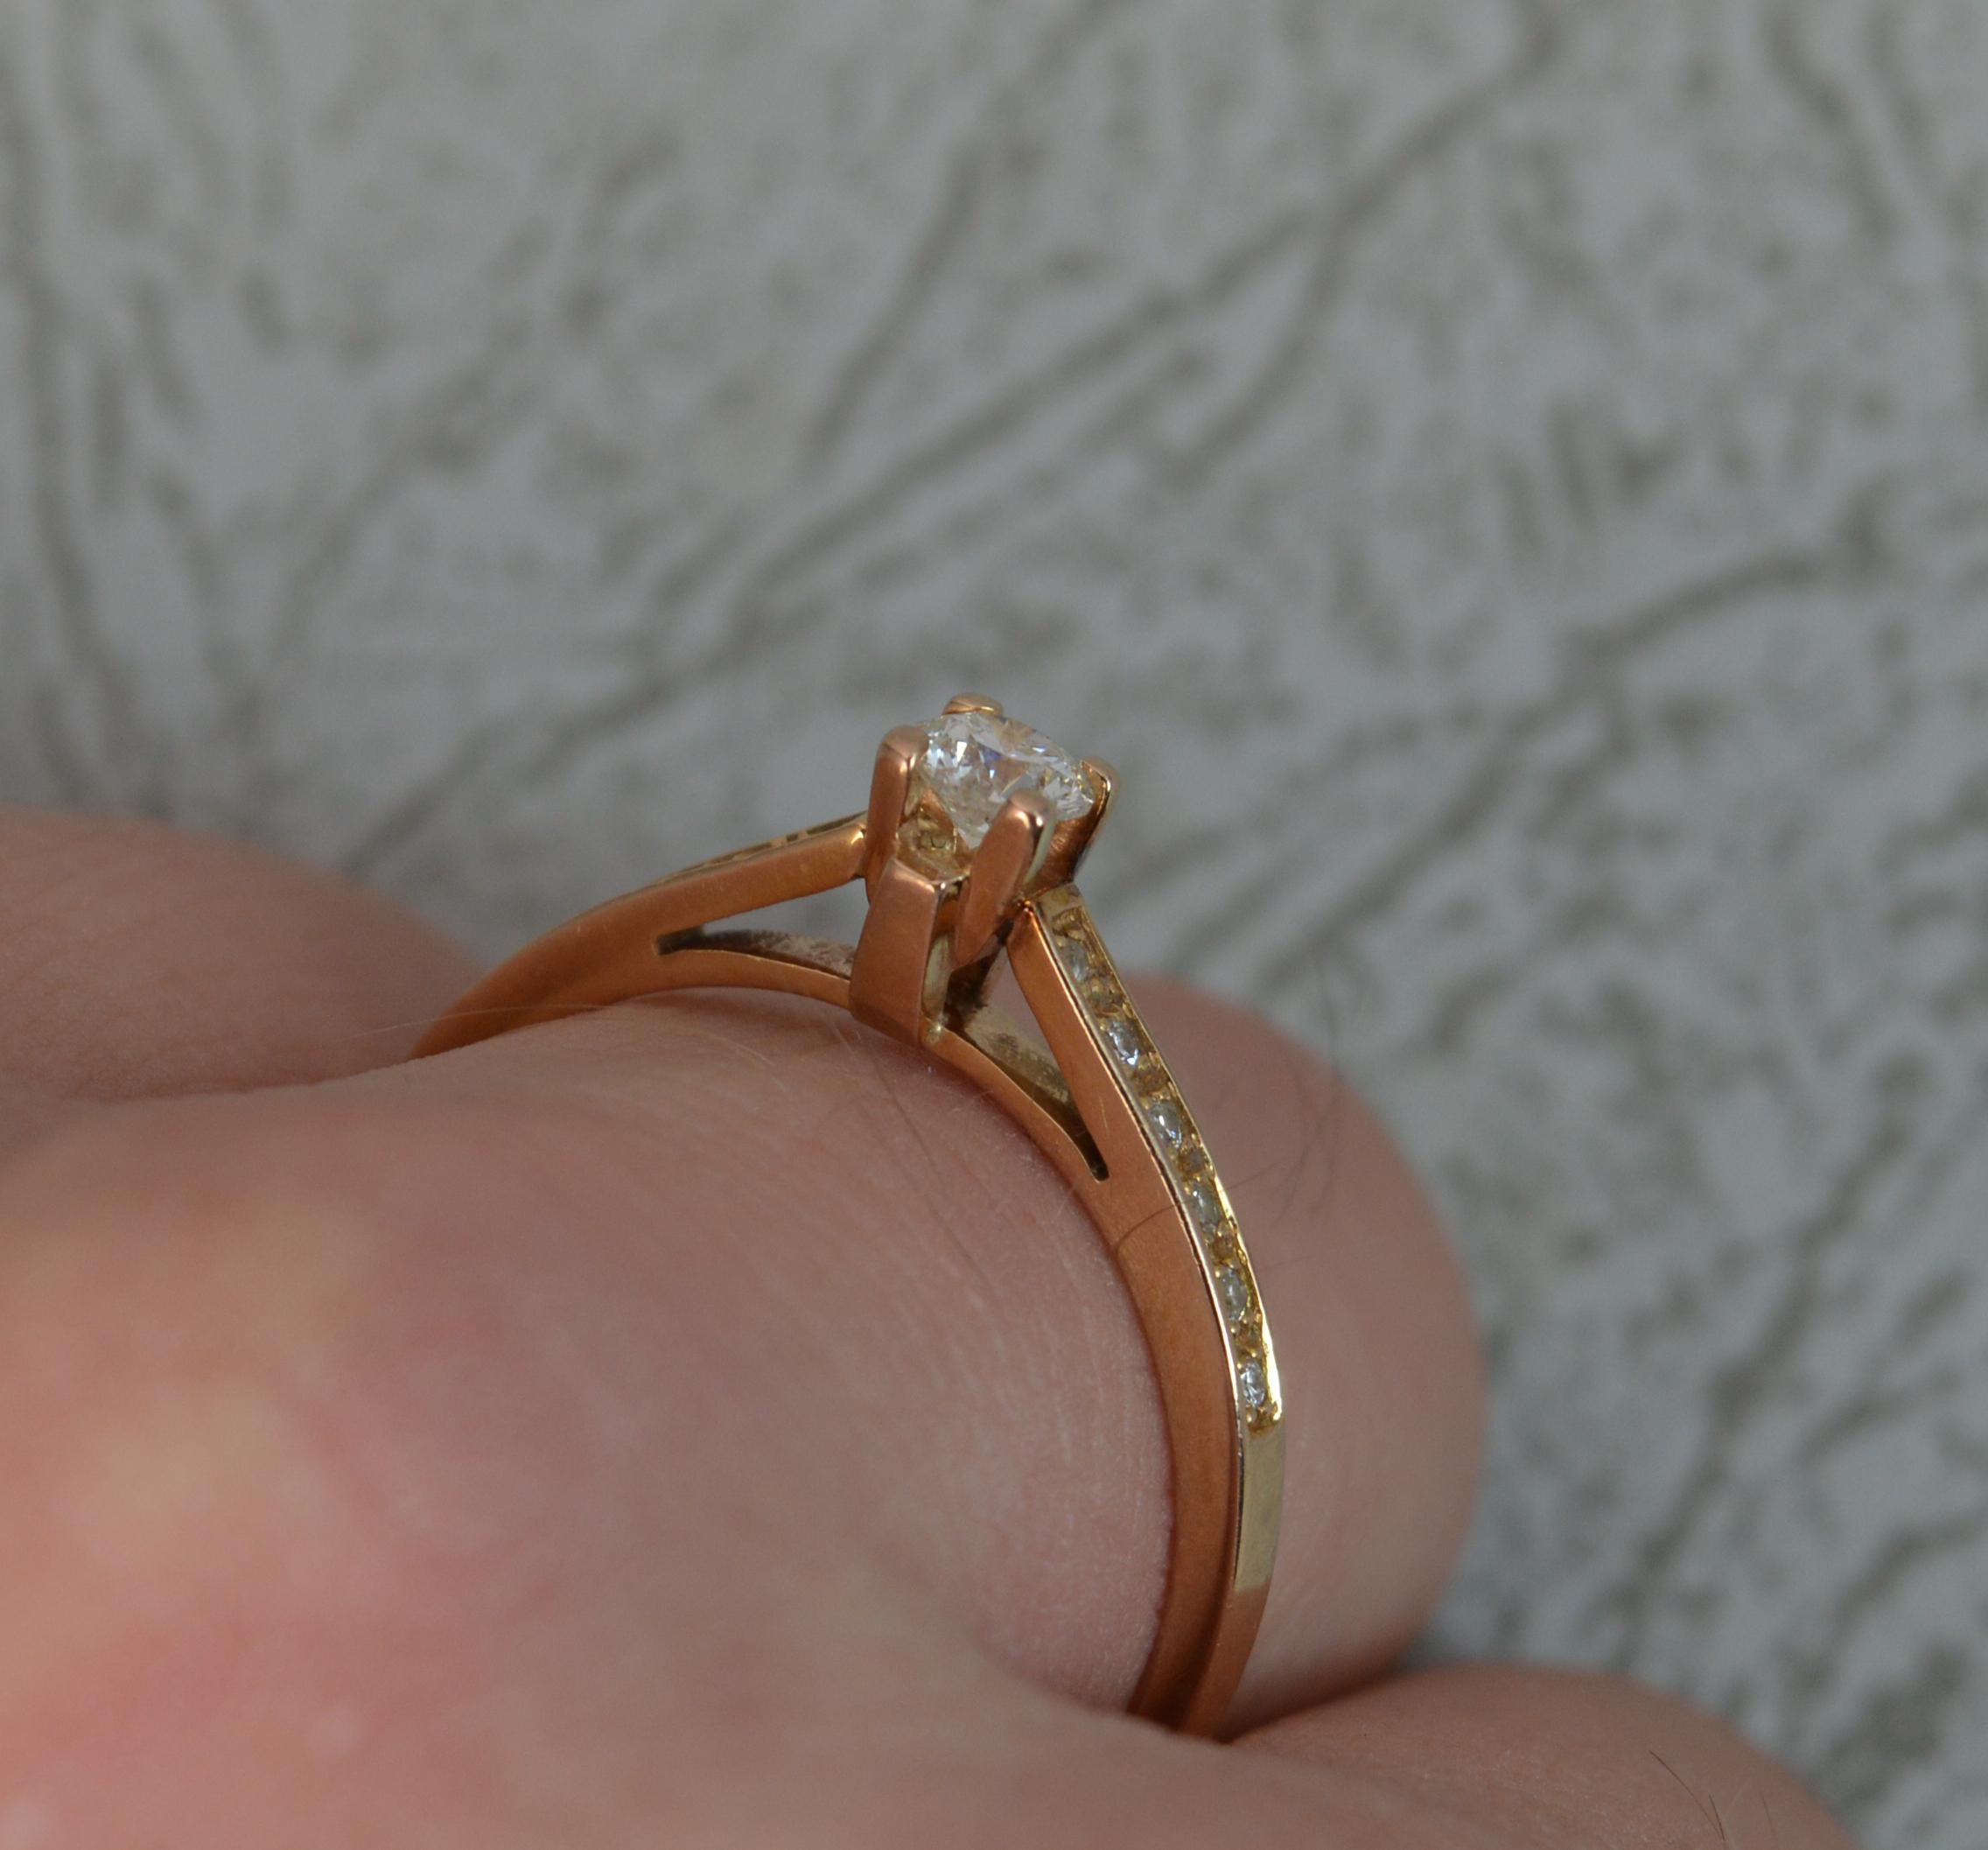 0.4 carat diamond ring